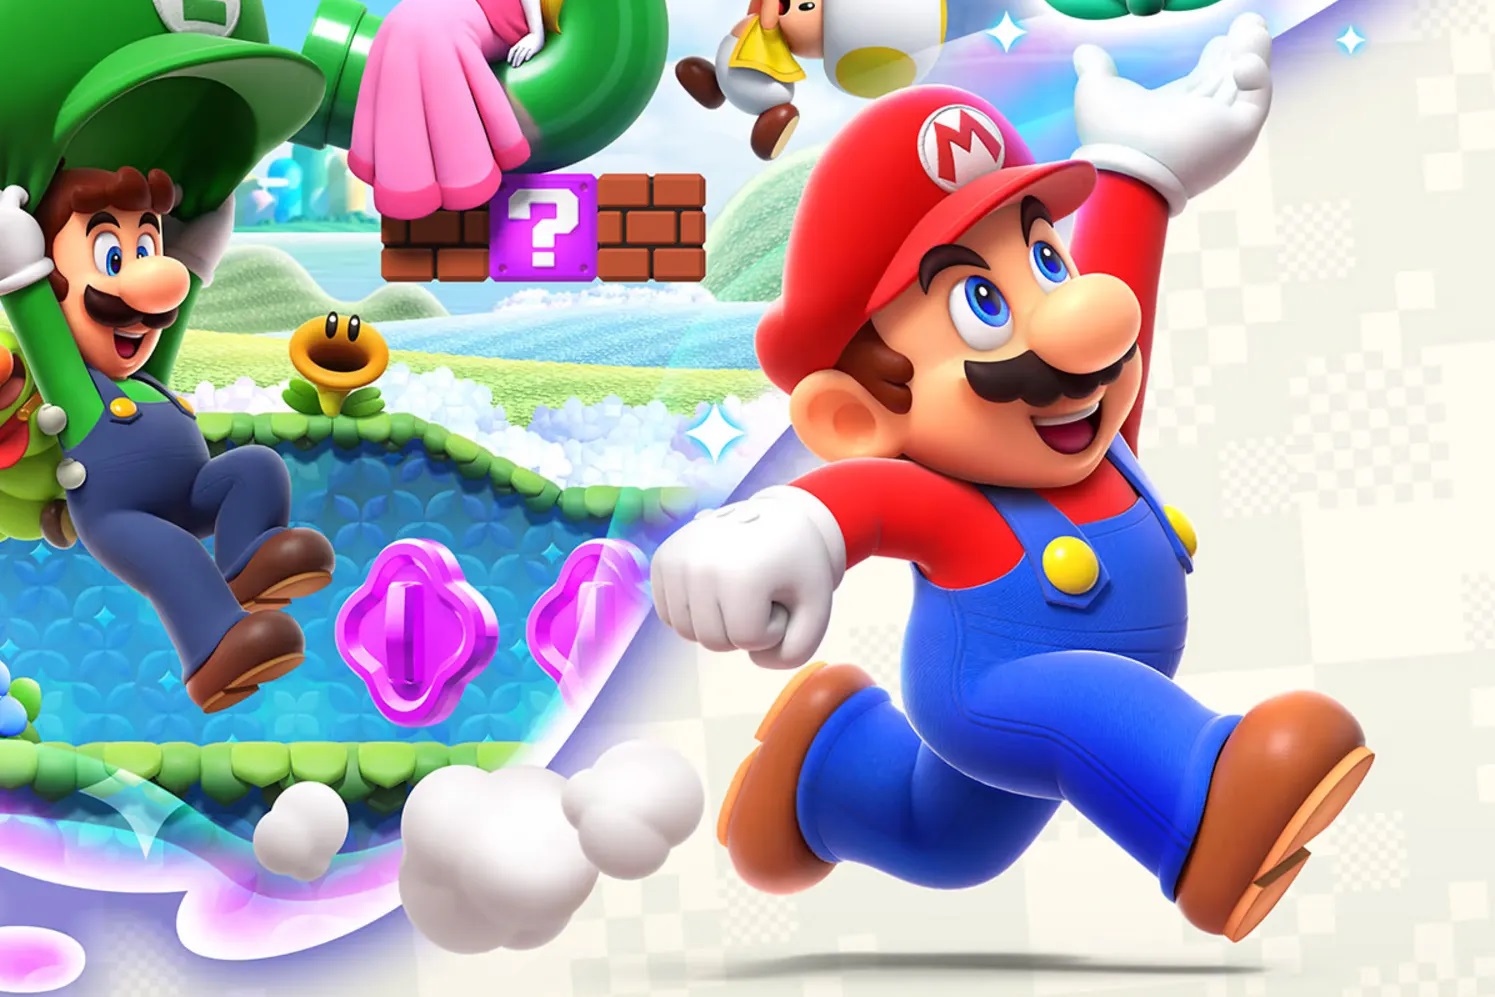 Super Mario Bros. Wonder sales hit 4.3 million copies in 2 weeks